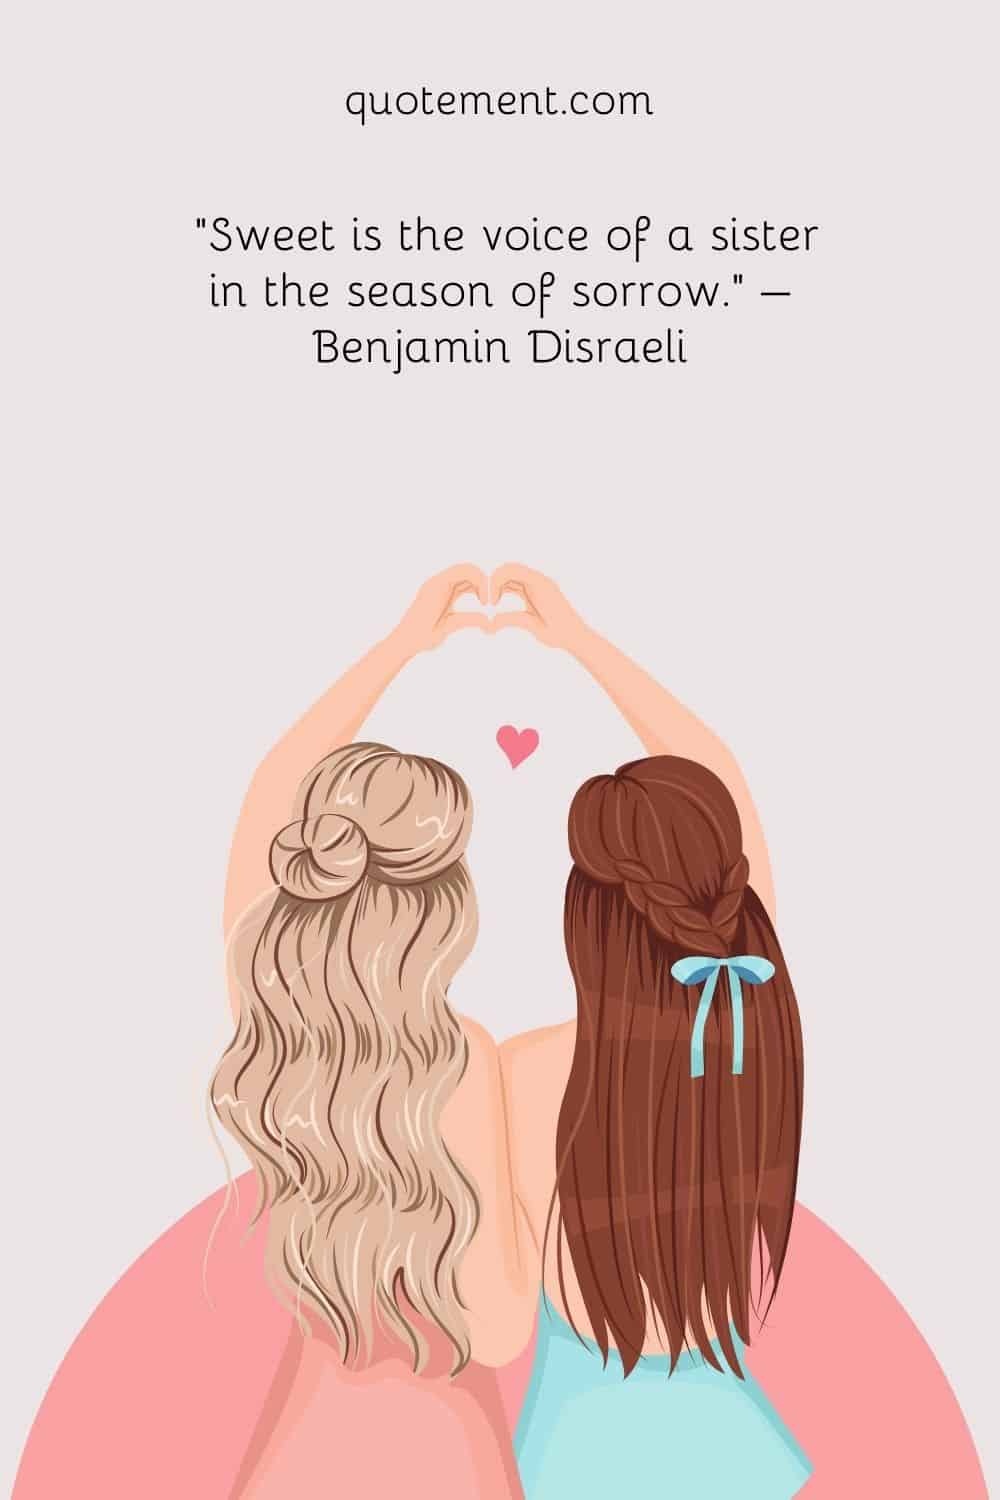 “Sweet is the voice of a sister in the season of sorrow.” – Benjamin Disraeli